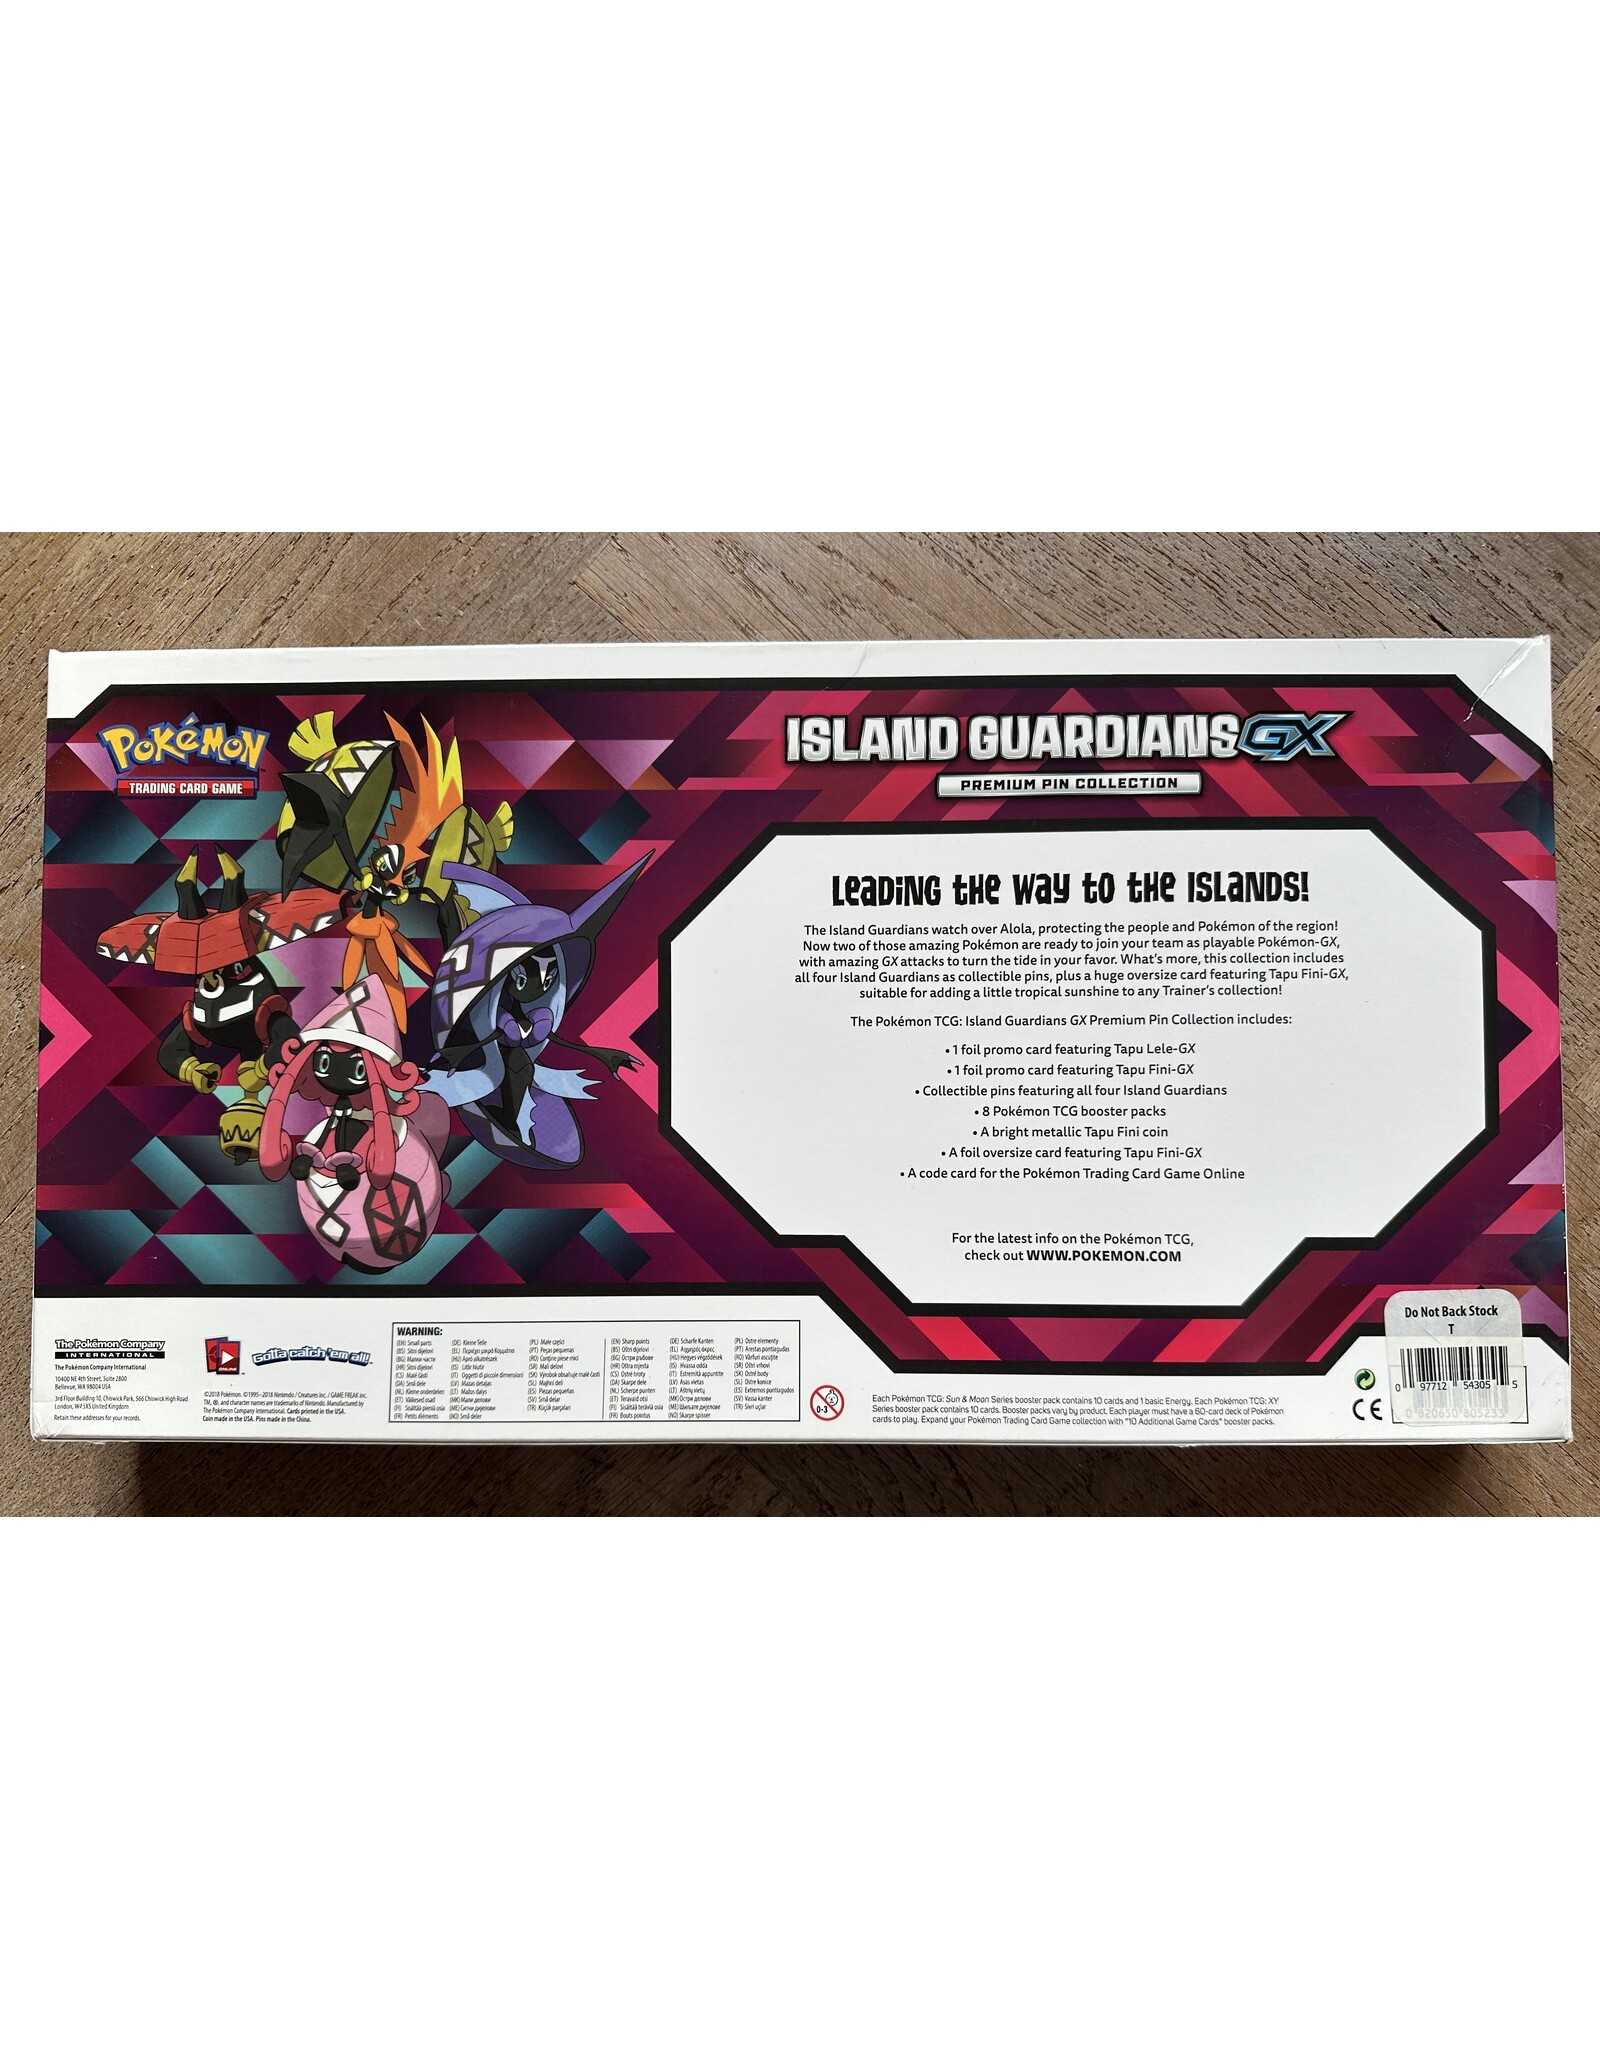 Island Guardians GX Premium Pin Collection (Target USA Exclusive)